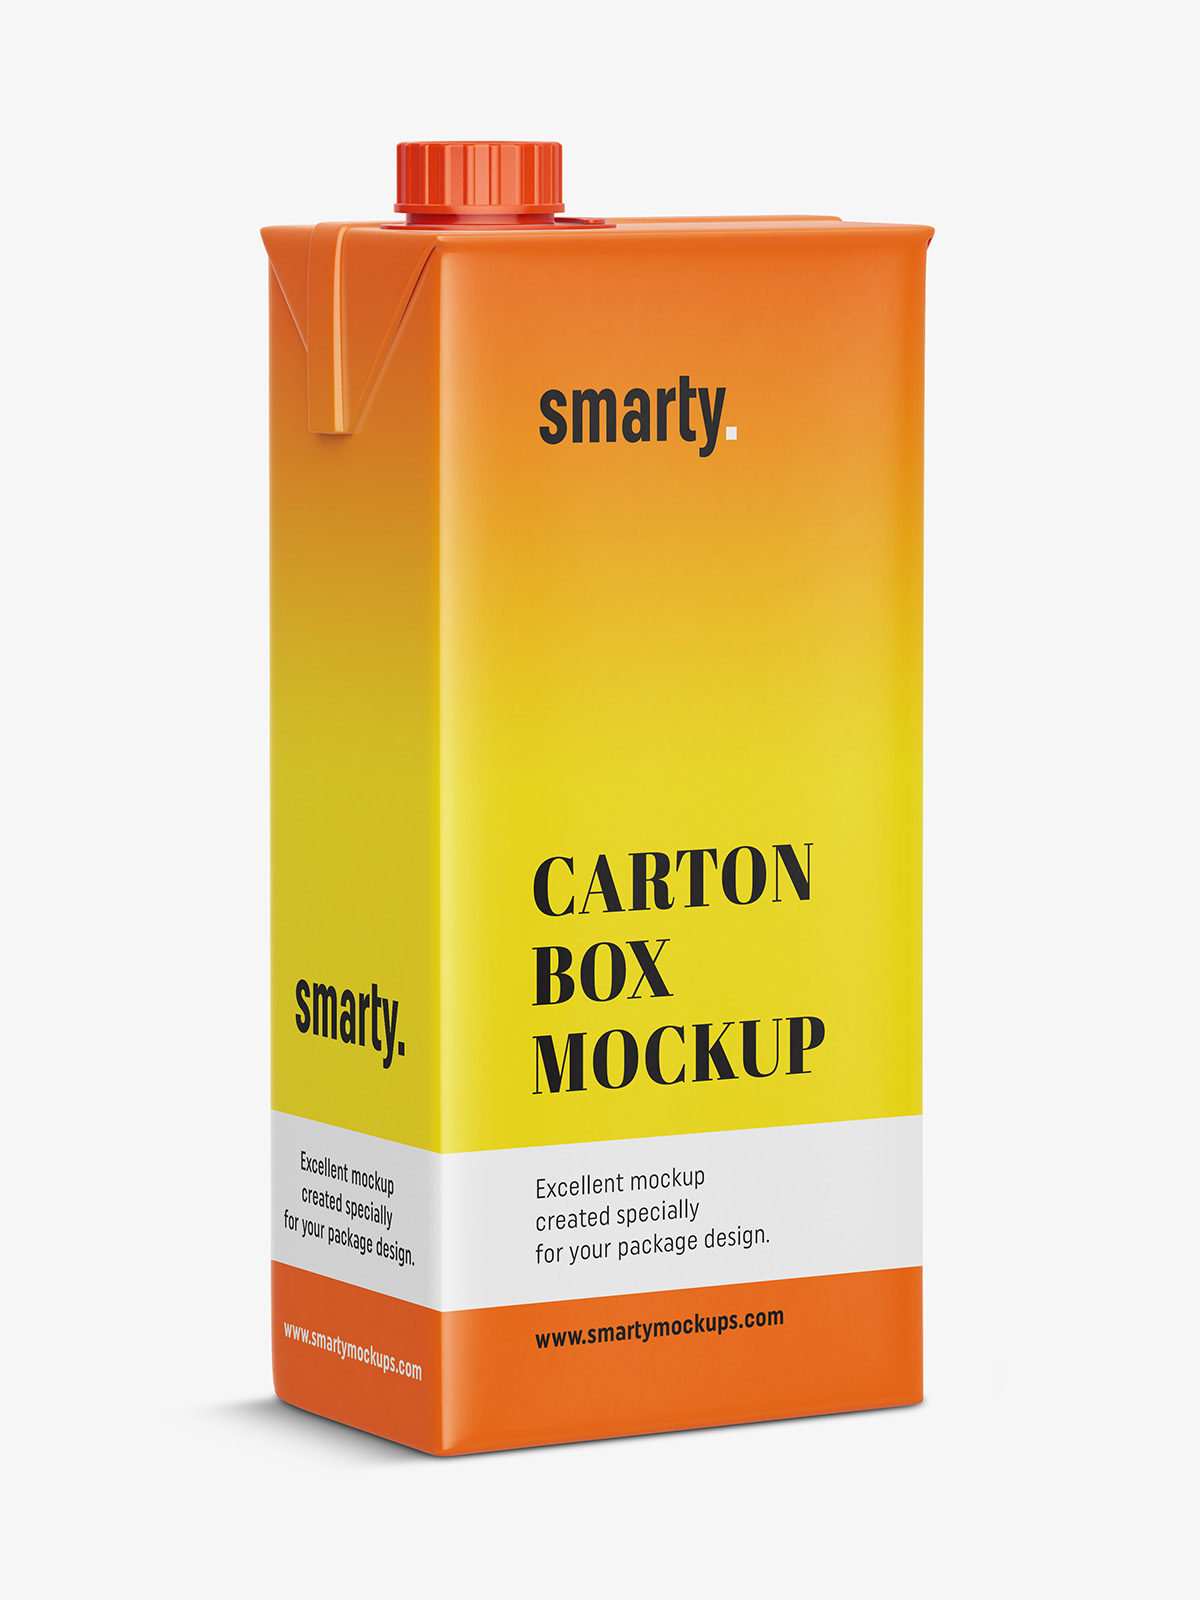 Carton box mockup - Smarty Mockups